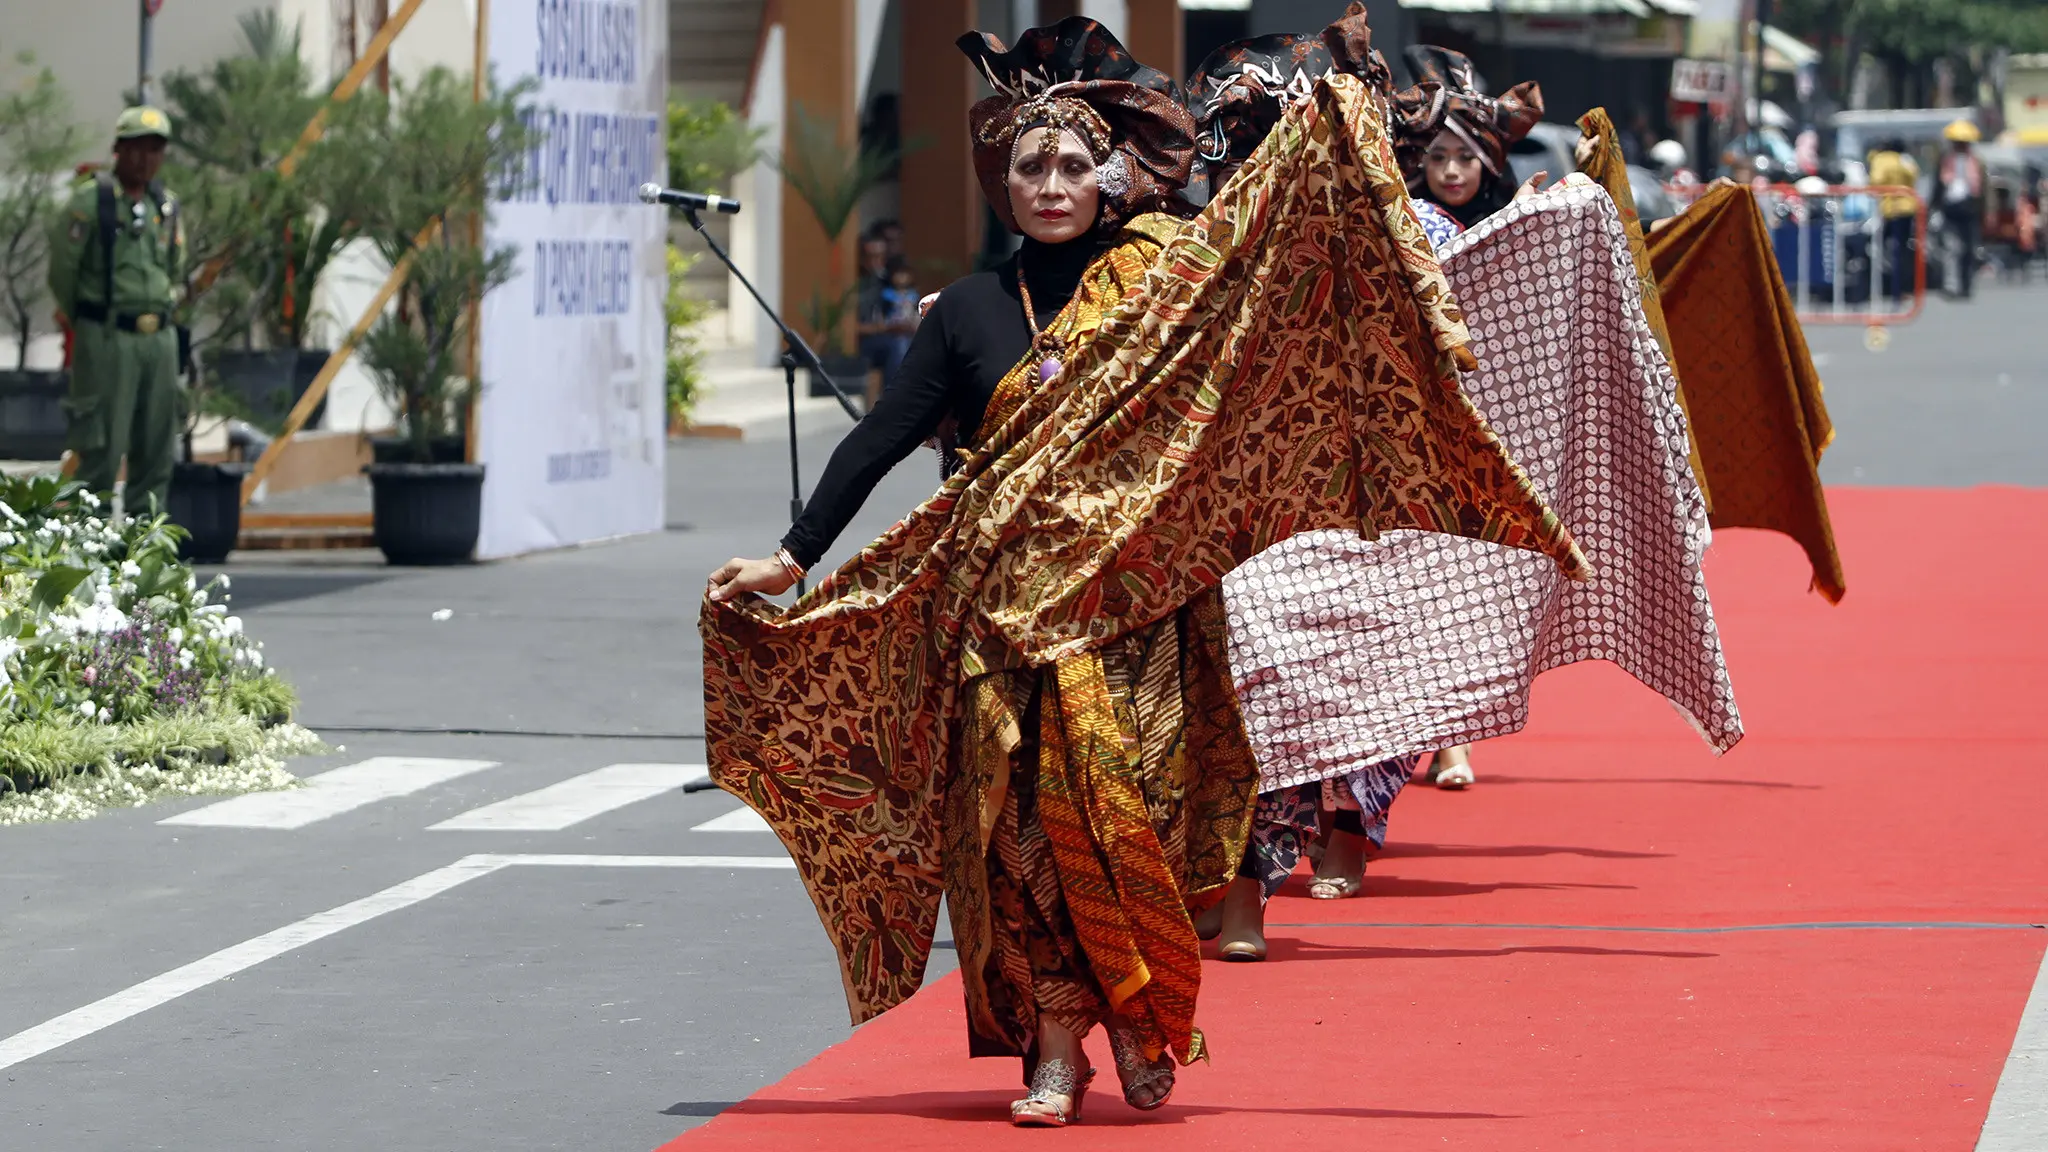 Para pedagang batik di Pasar Klewer Solo ikut memeriahkan Hari Batik dengan melakukan peragaan busana di catwalk dadakan di jalan depan pasar,Senin (2/10).(Liputan6.com/Fajar Abrori)